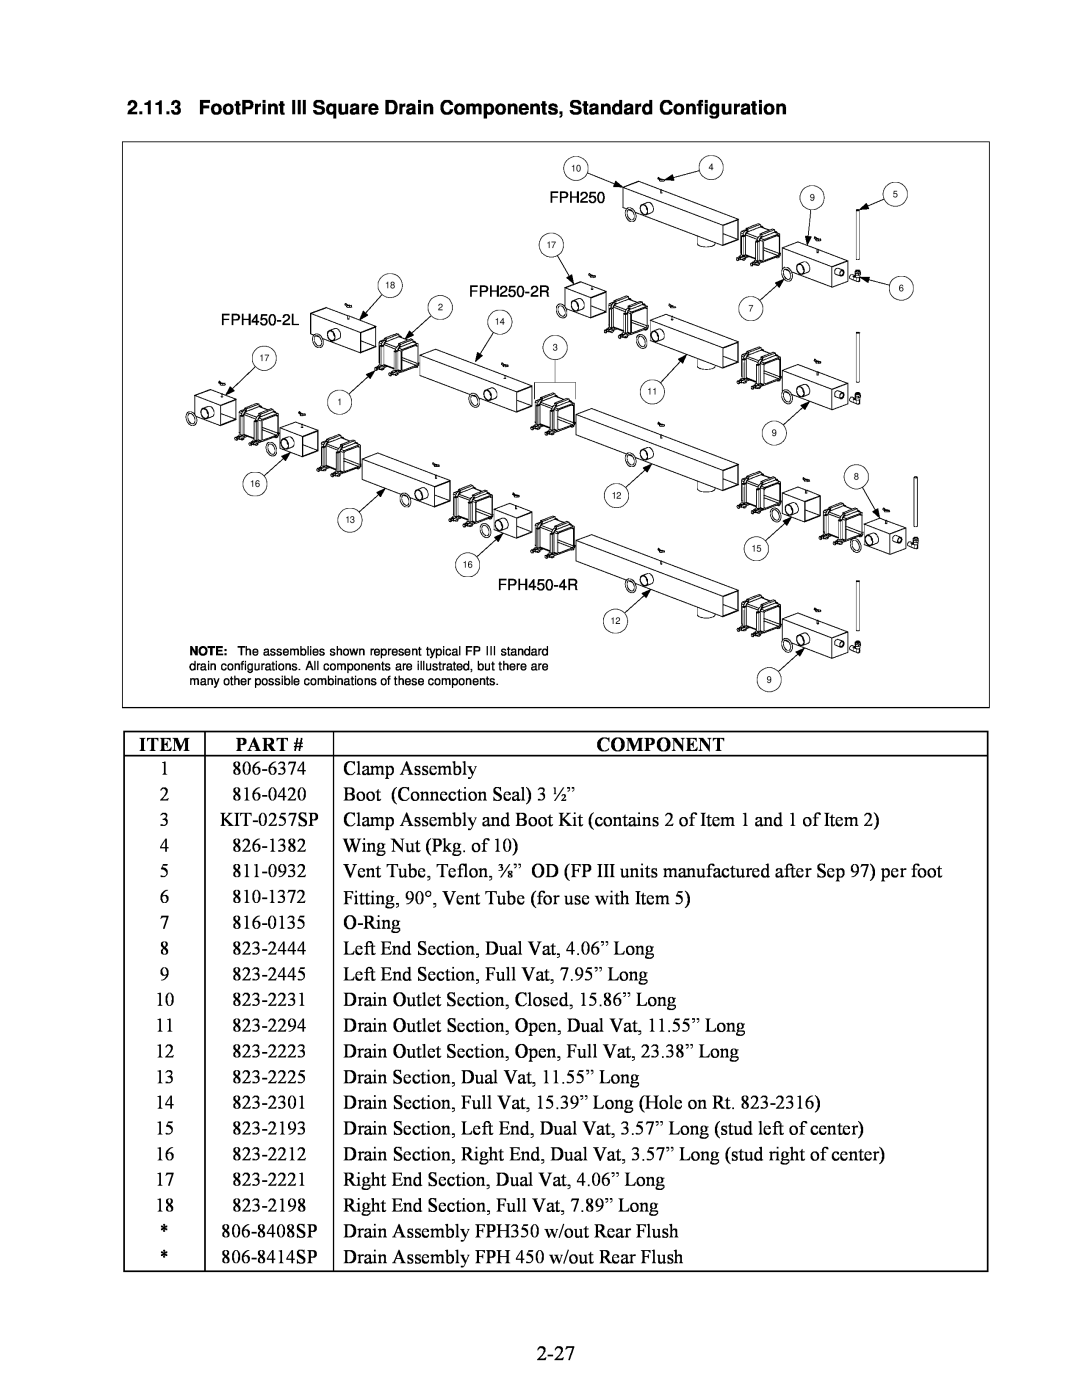 Frymaster H50 Series manual Item, 1806-6374 2816-0420 3KIT-0257SP 4826-1382, Component 